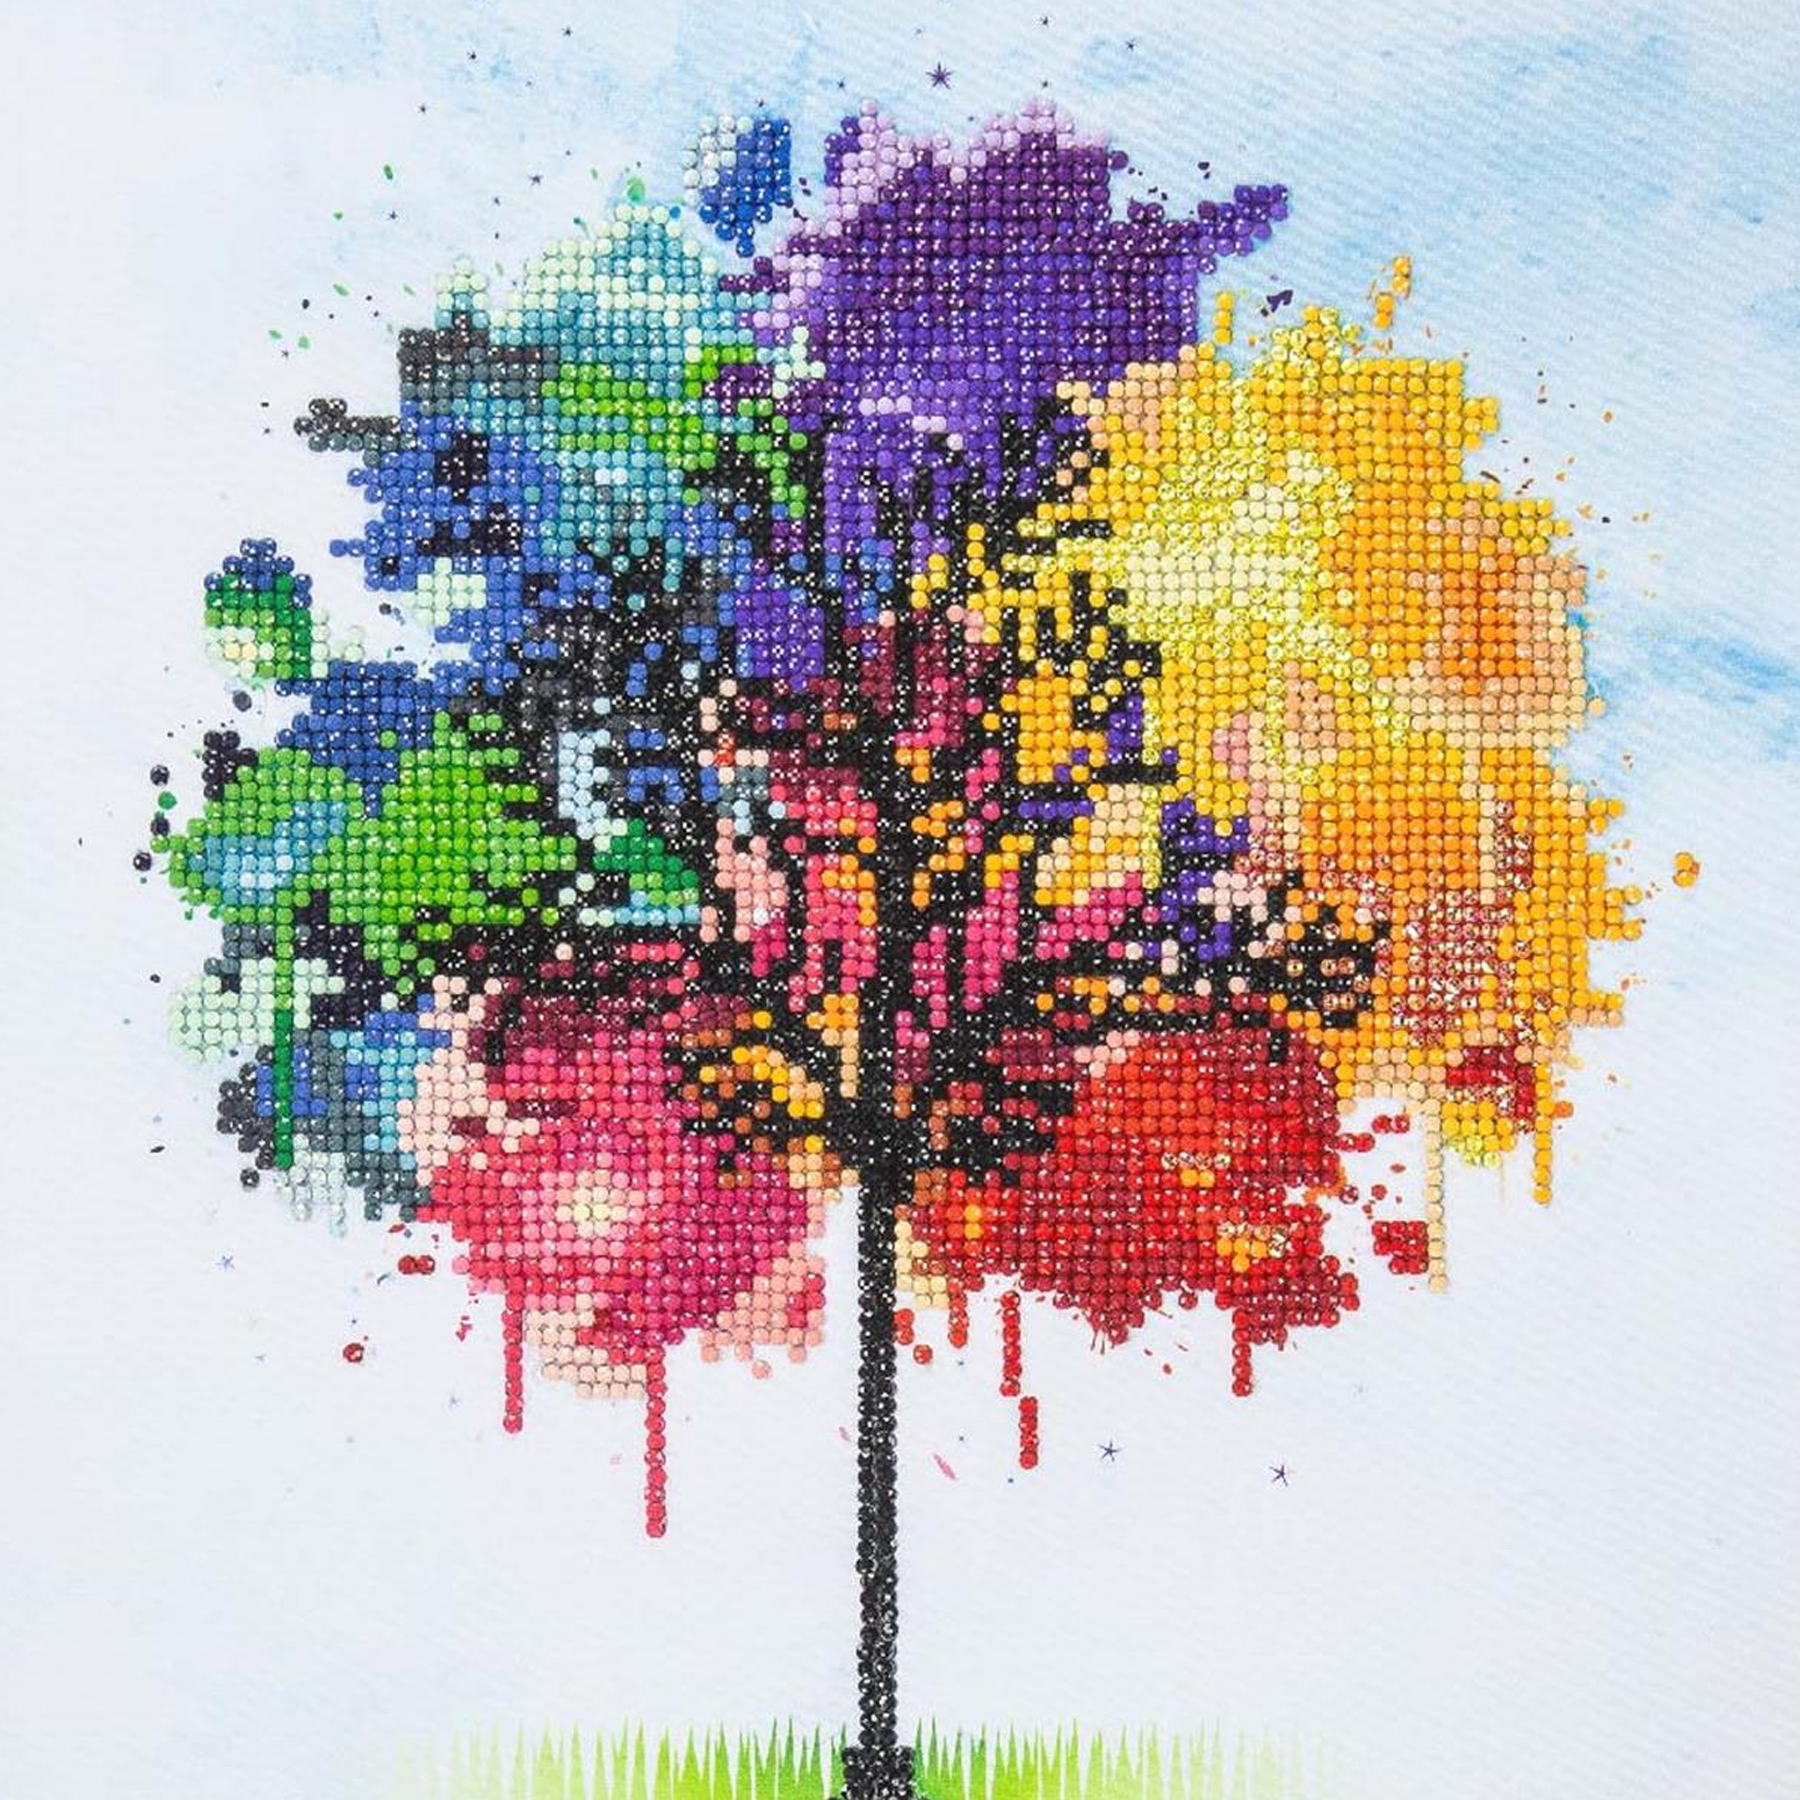 Rainbow Dot Art Paint Set